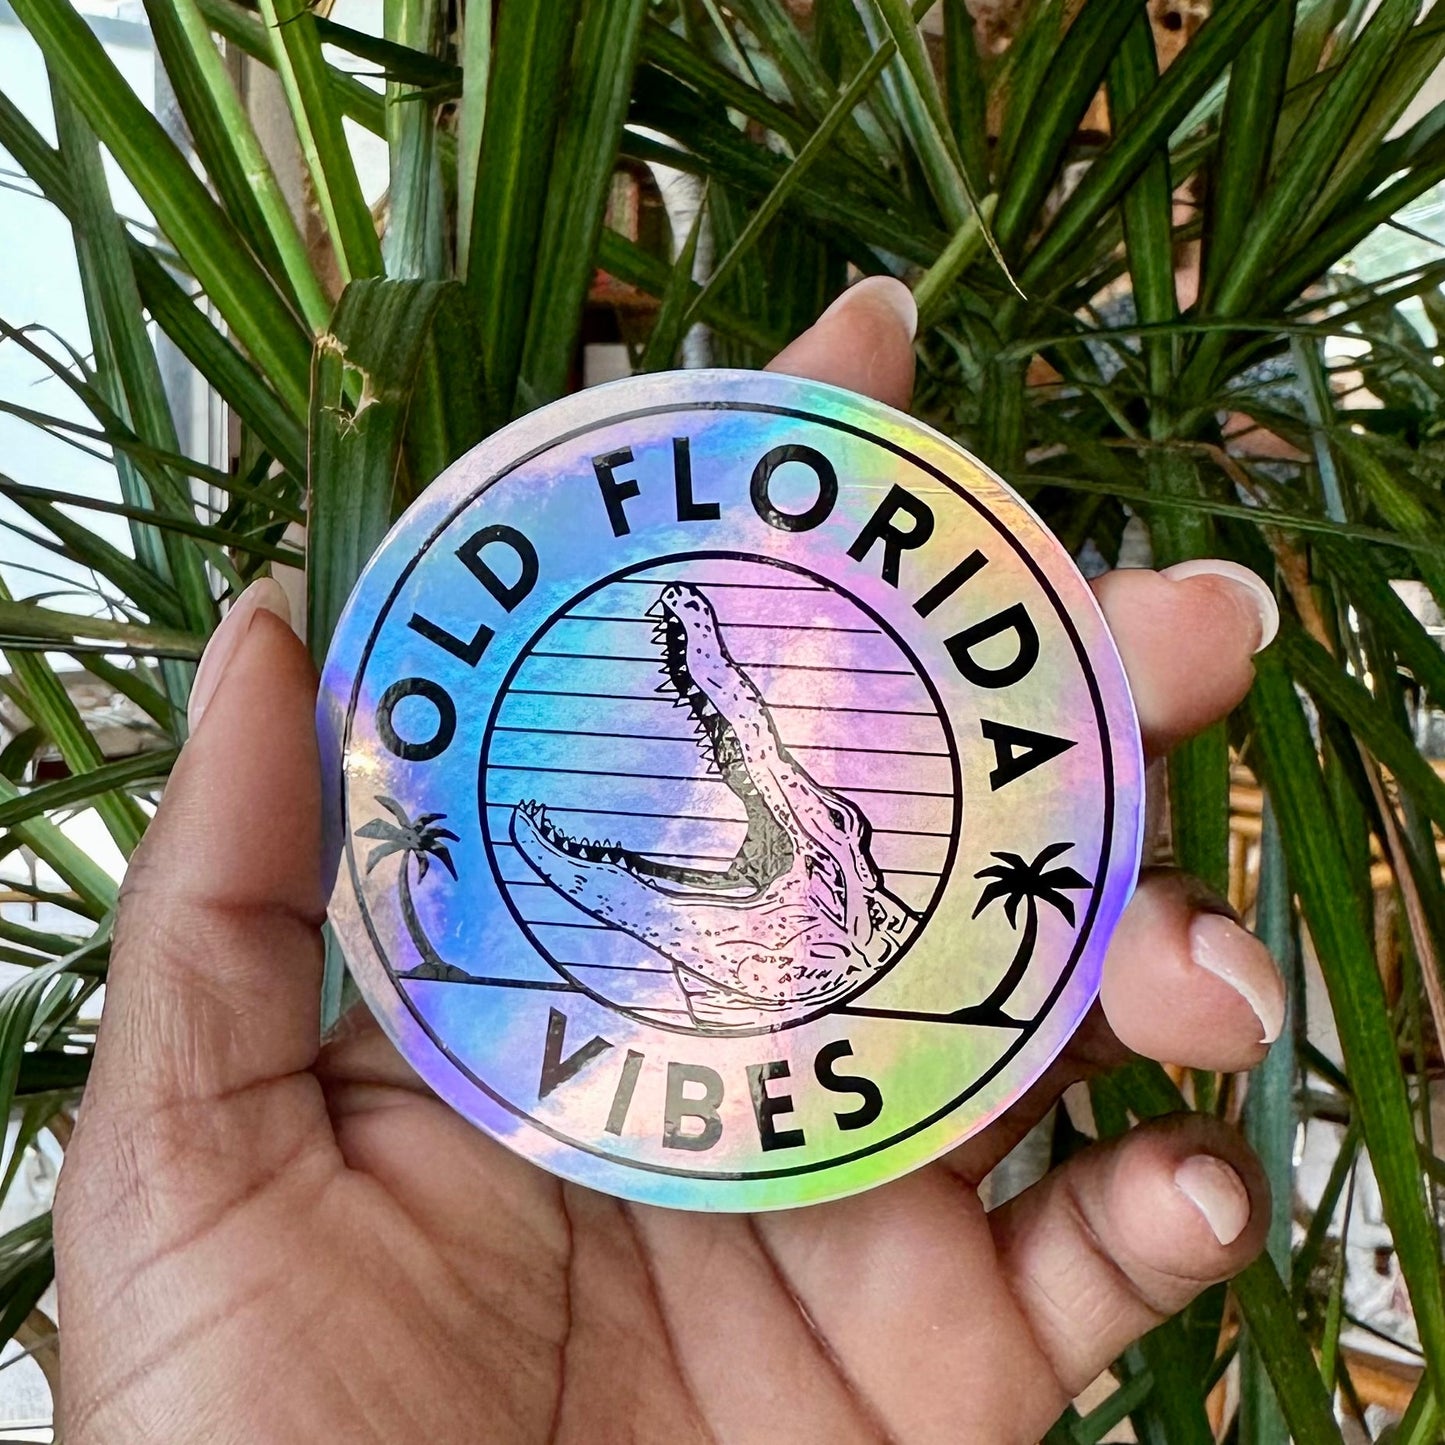 Old Florida Vibes Sticker